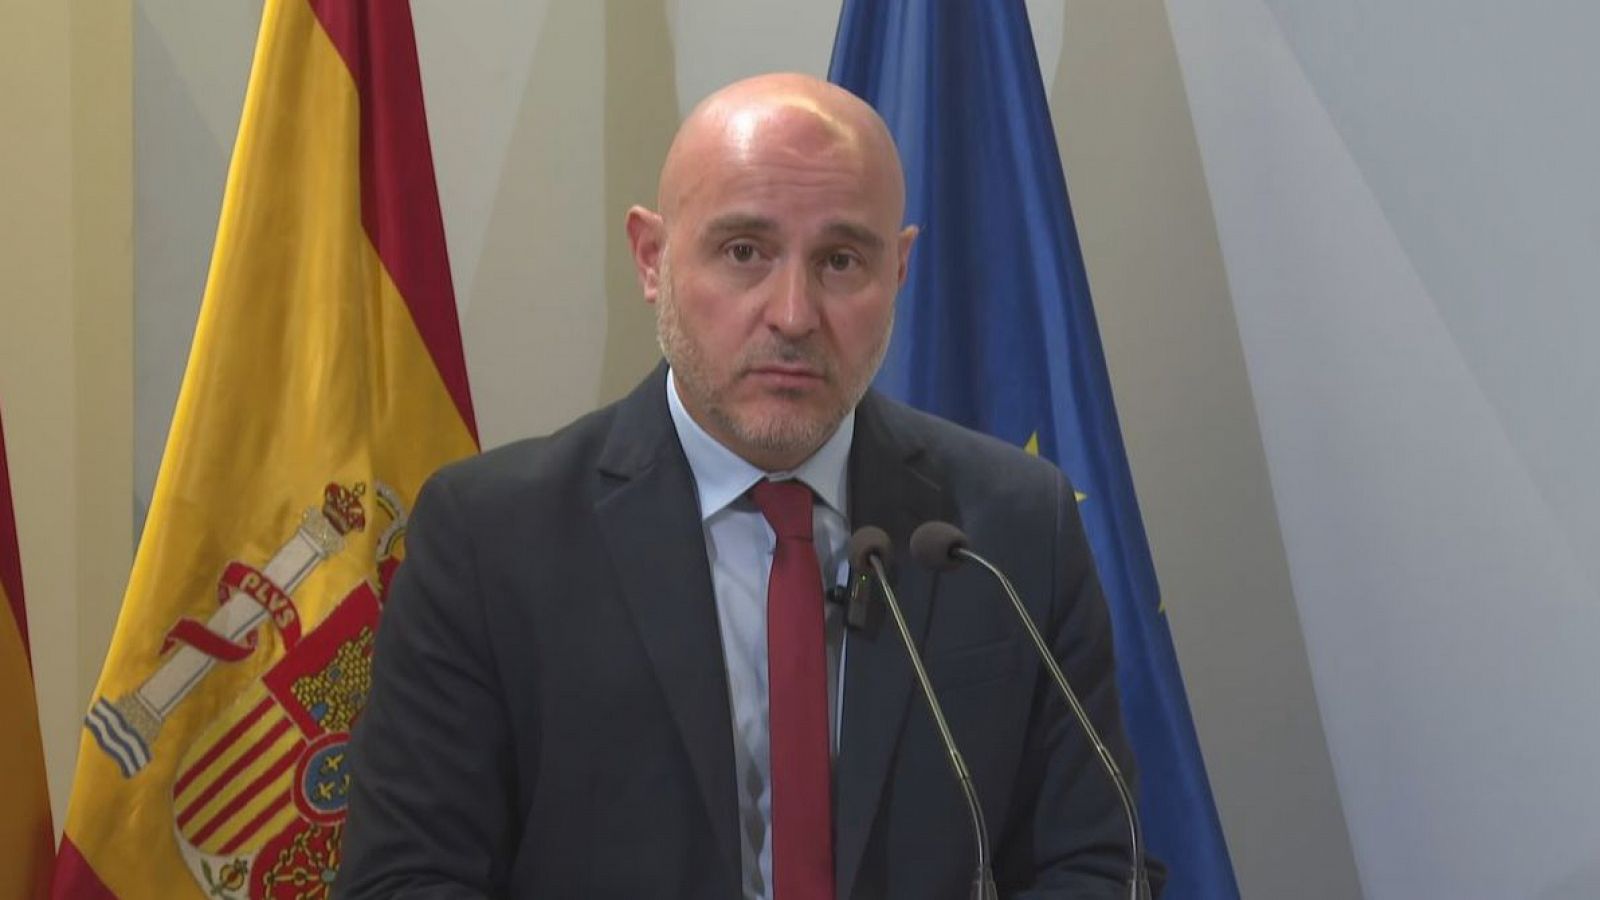 El delegat del Govern espanyol a Catalunya, Carlos Prieto, presenta el dispositiu electoral del 9-J